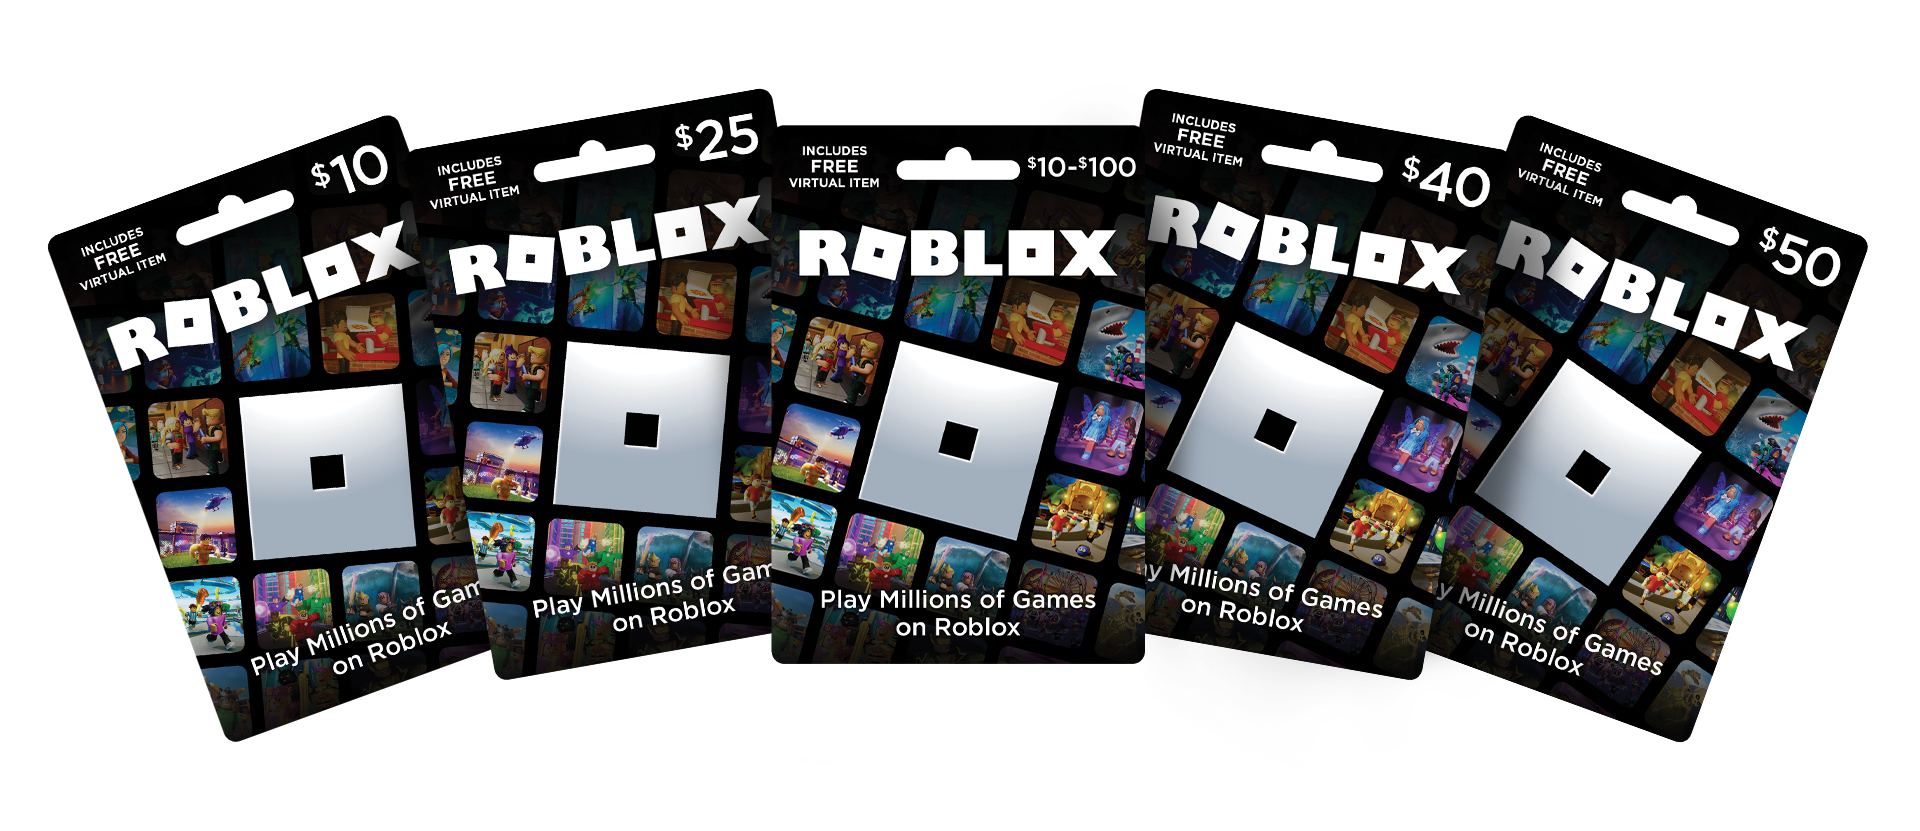 Free Roblox Virtual Item Codes 2020